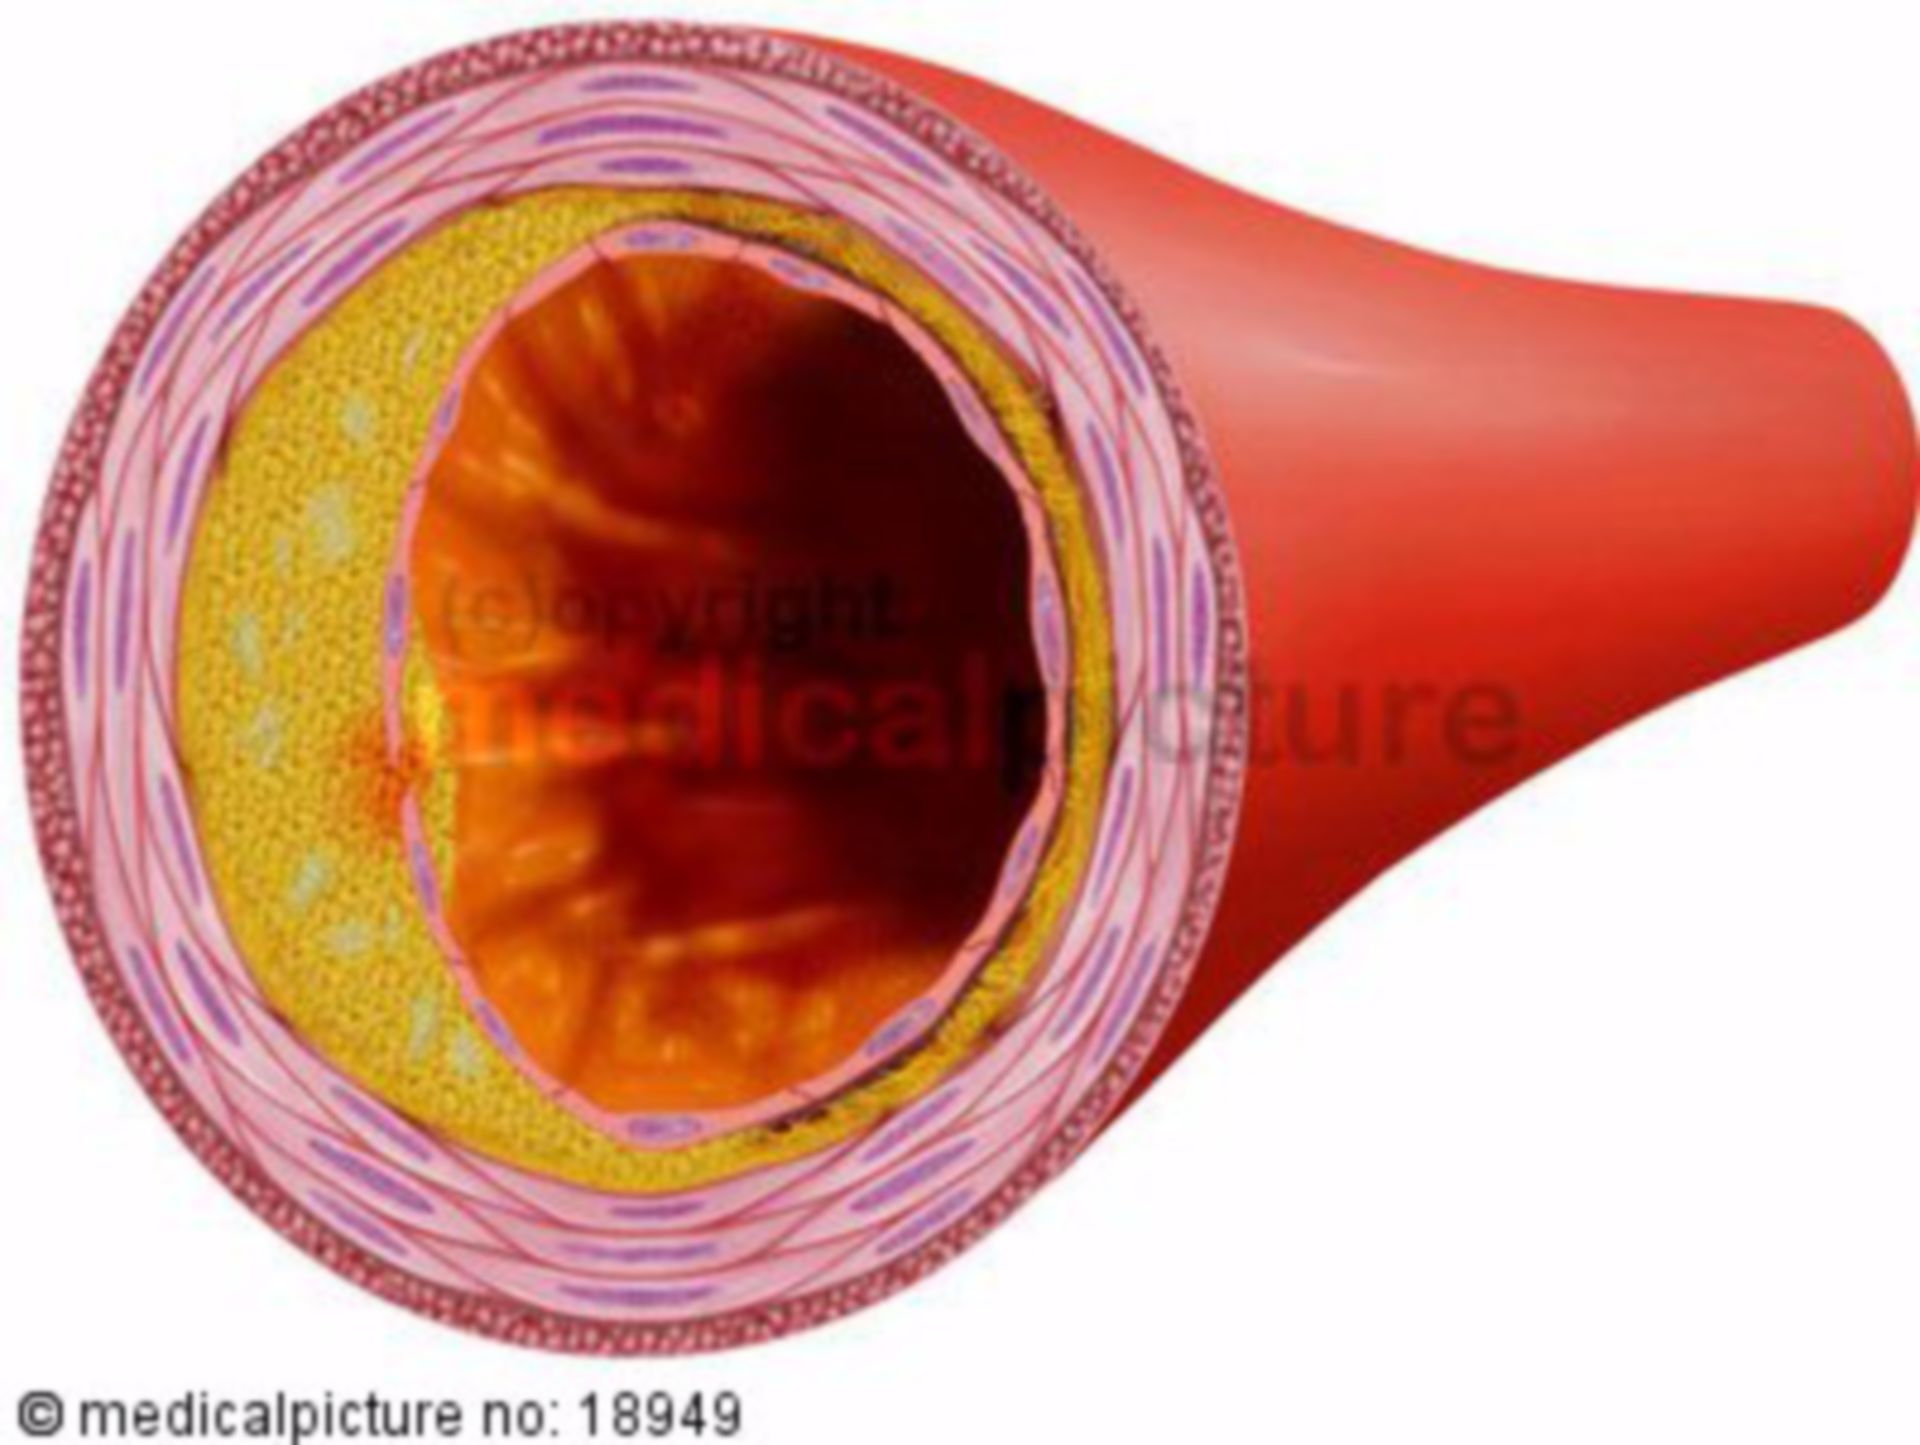 Arteriosklerotisches Blutgefäß, Arterienverkalkung